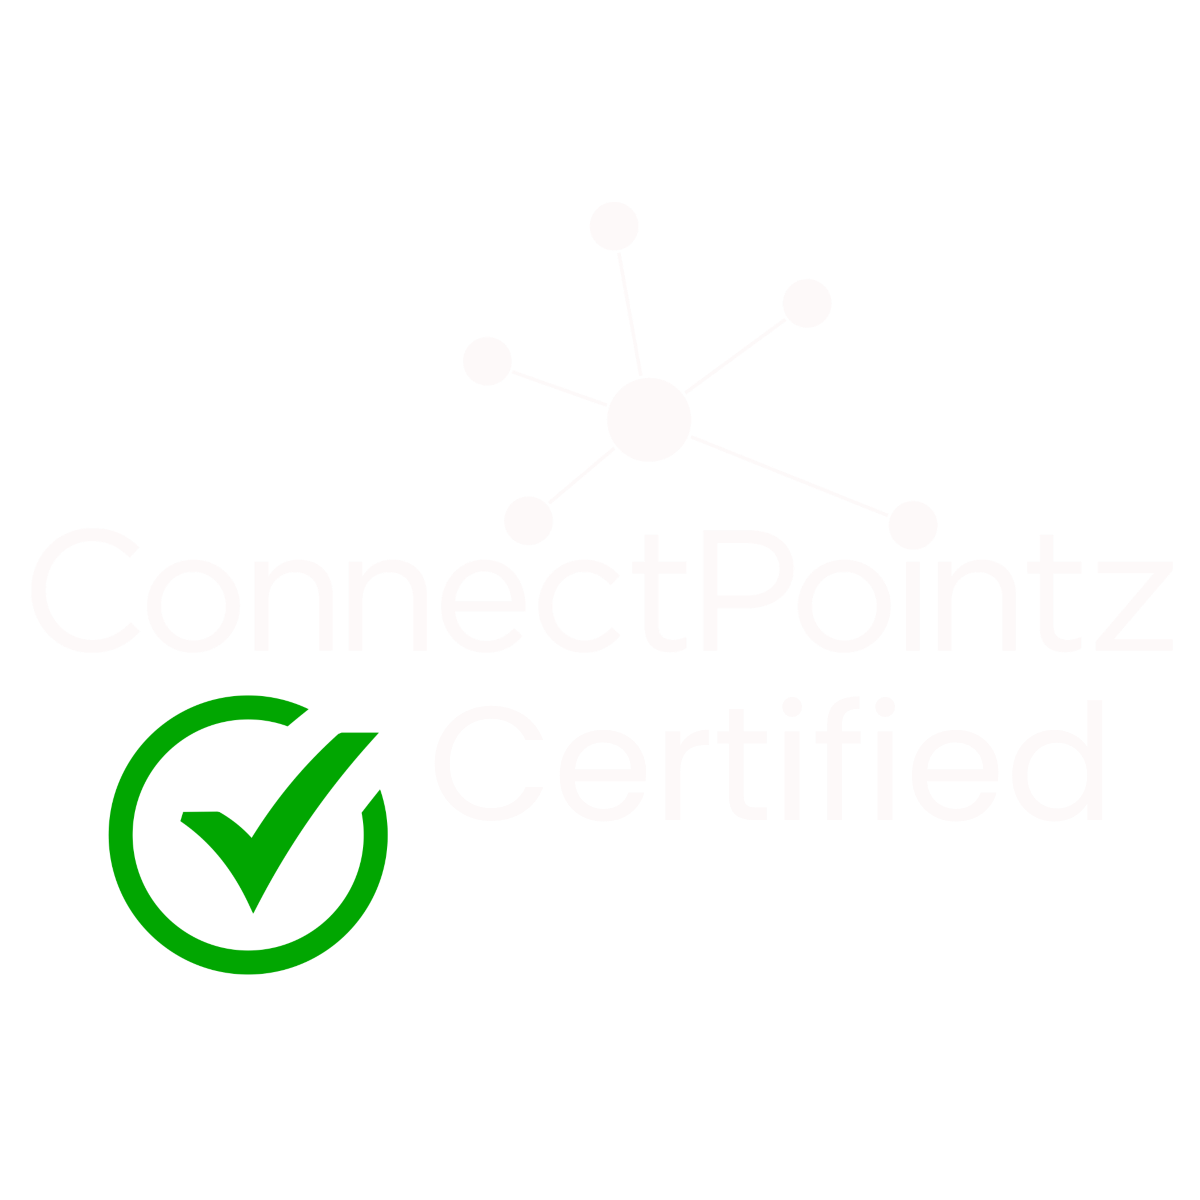 ConnectPointz Logo - black